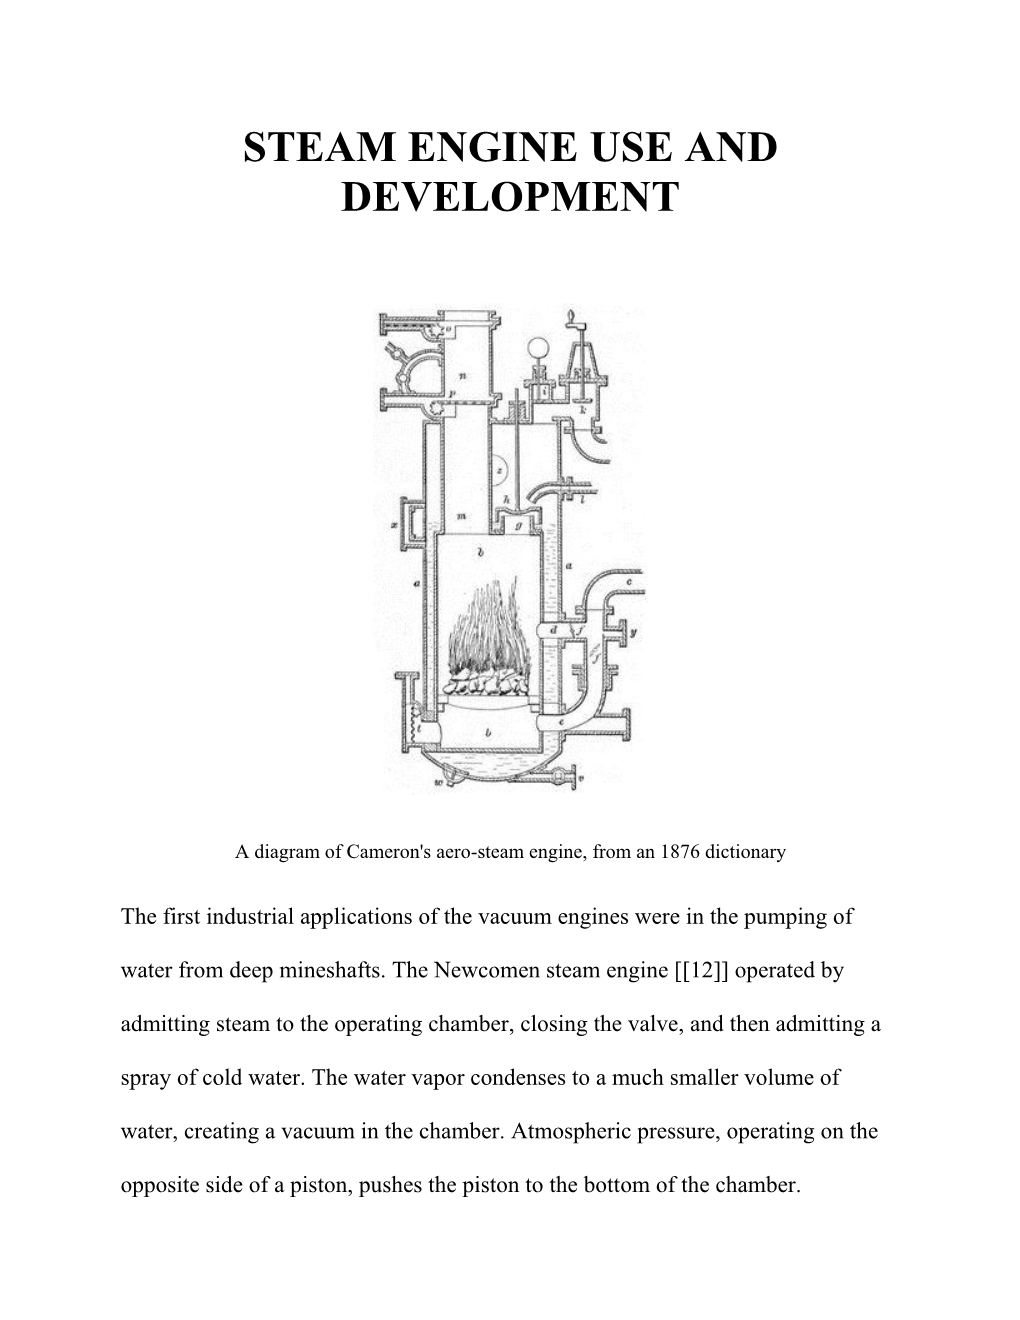 Steam Engine Use and Development